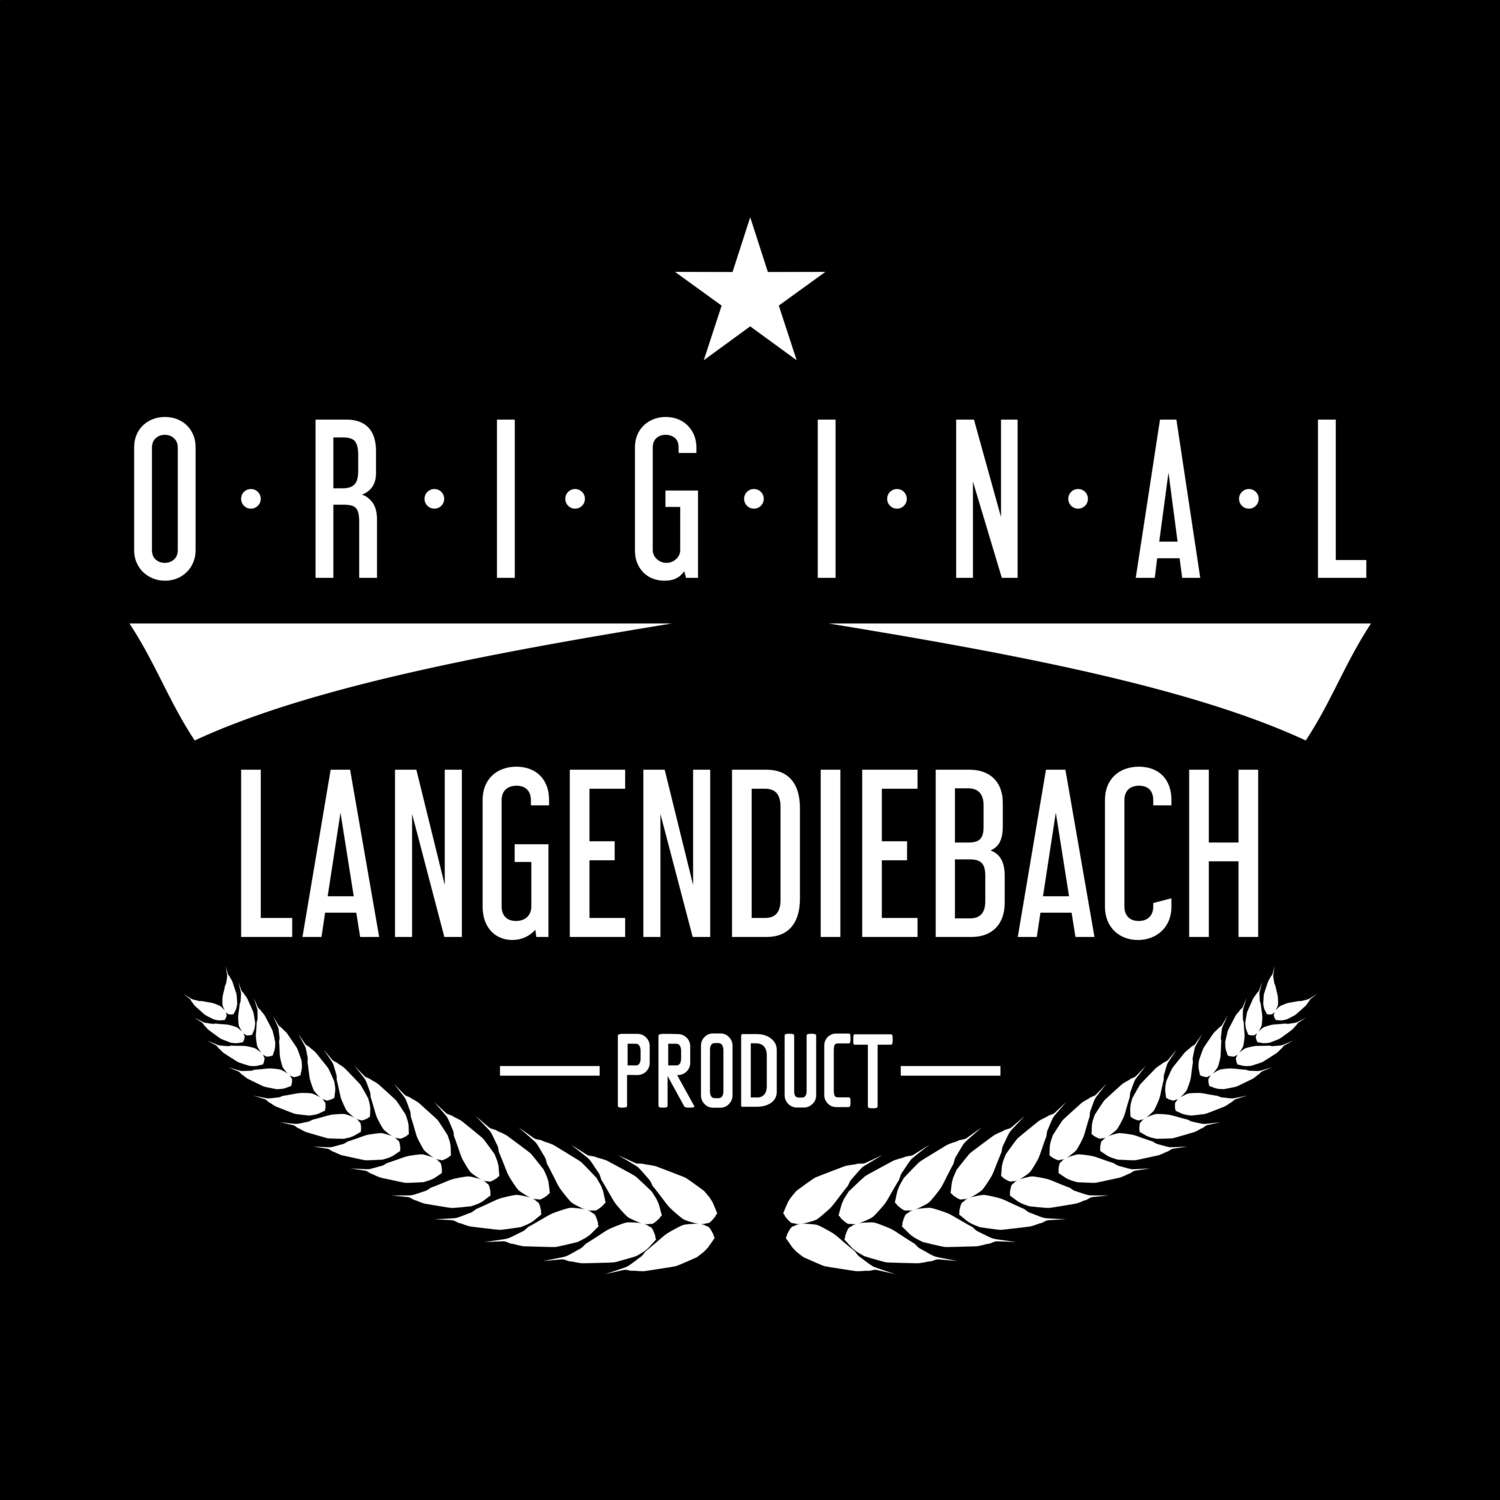 Langendiebach T-Shirt »Original Product«